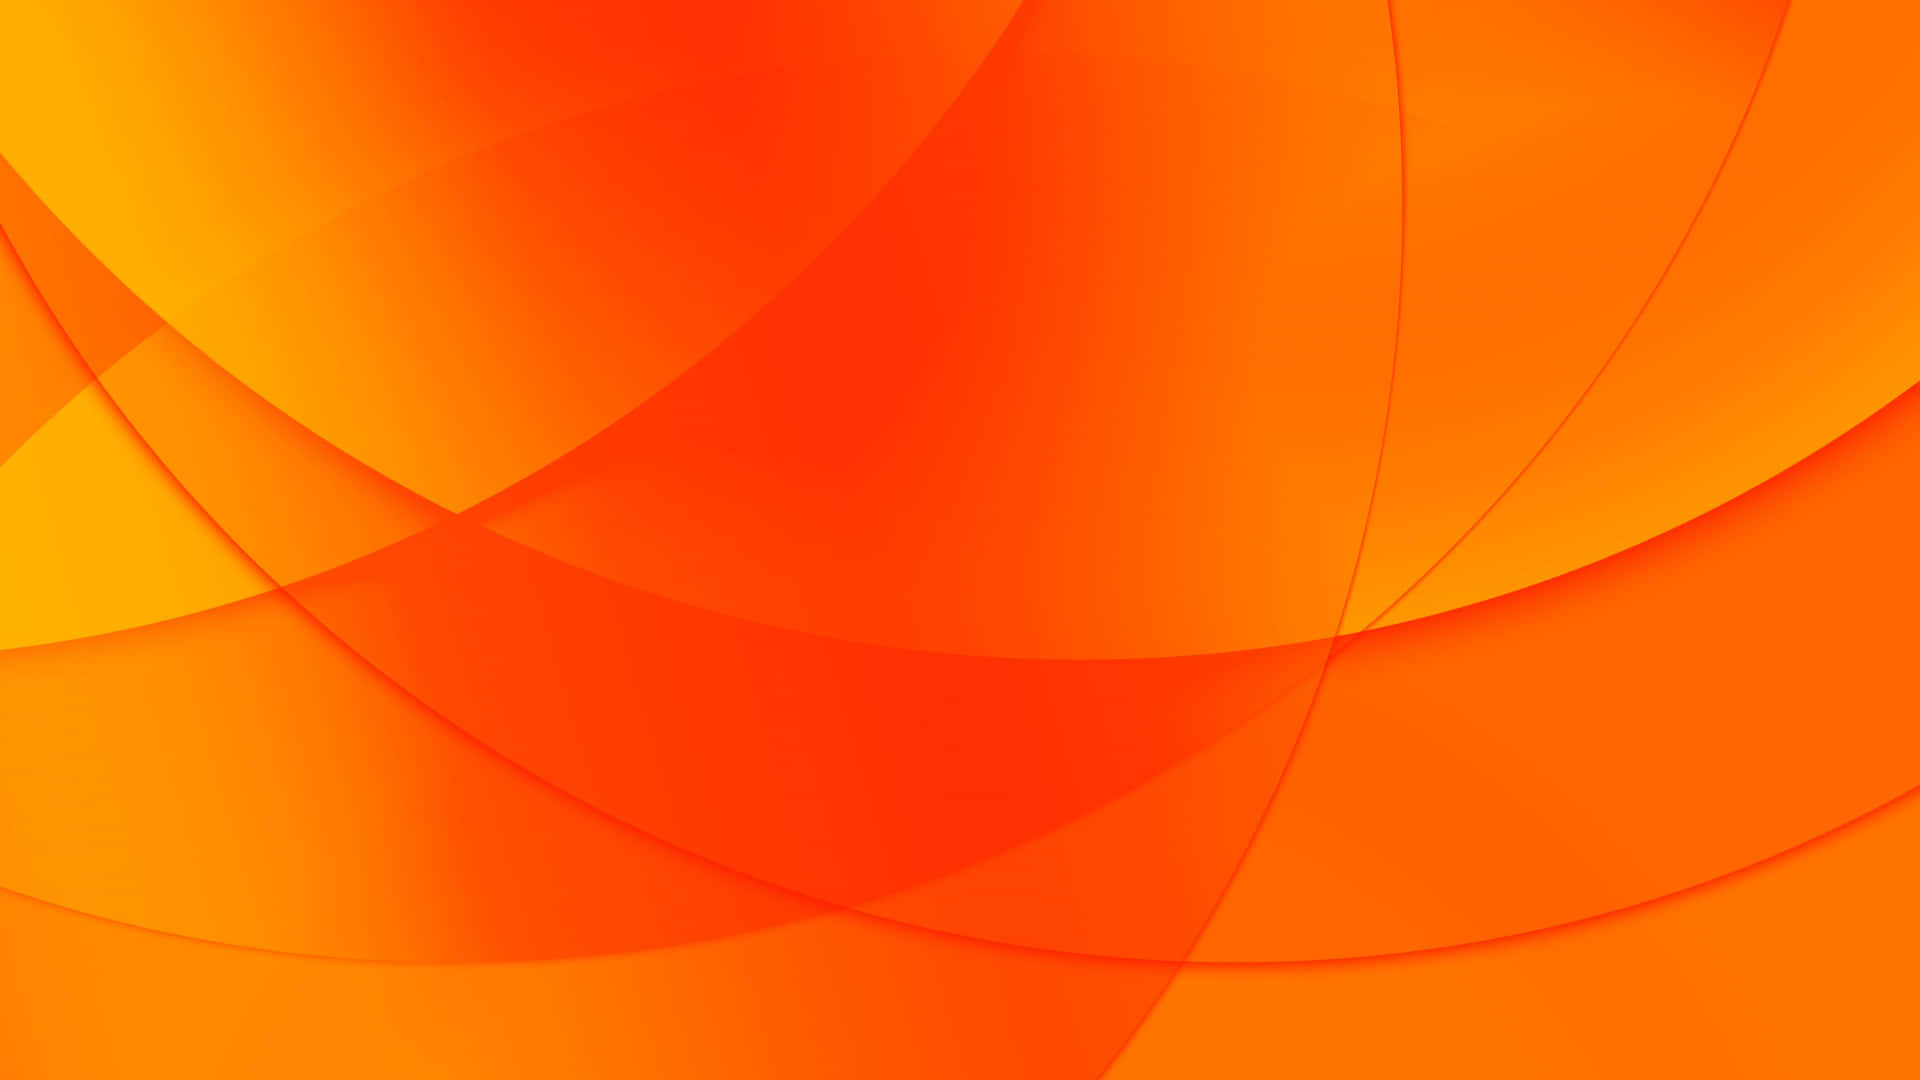 Cool Orange 1920 X 1080 Wallpaper